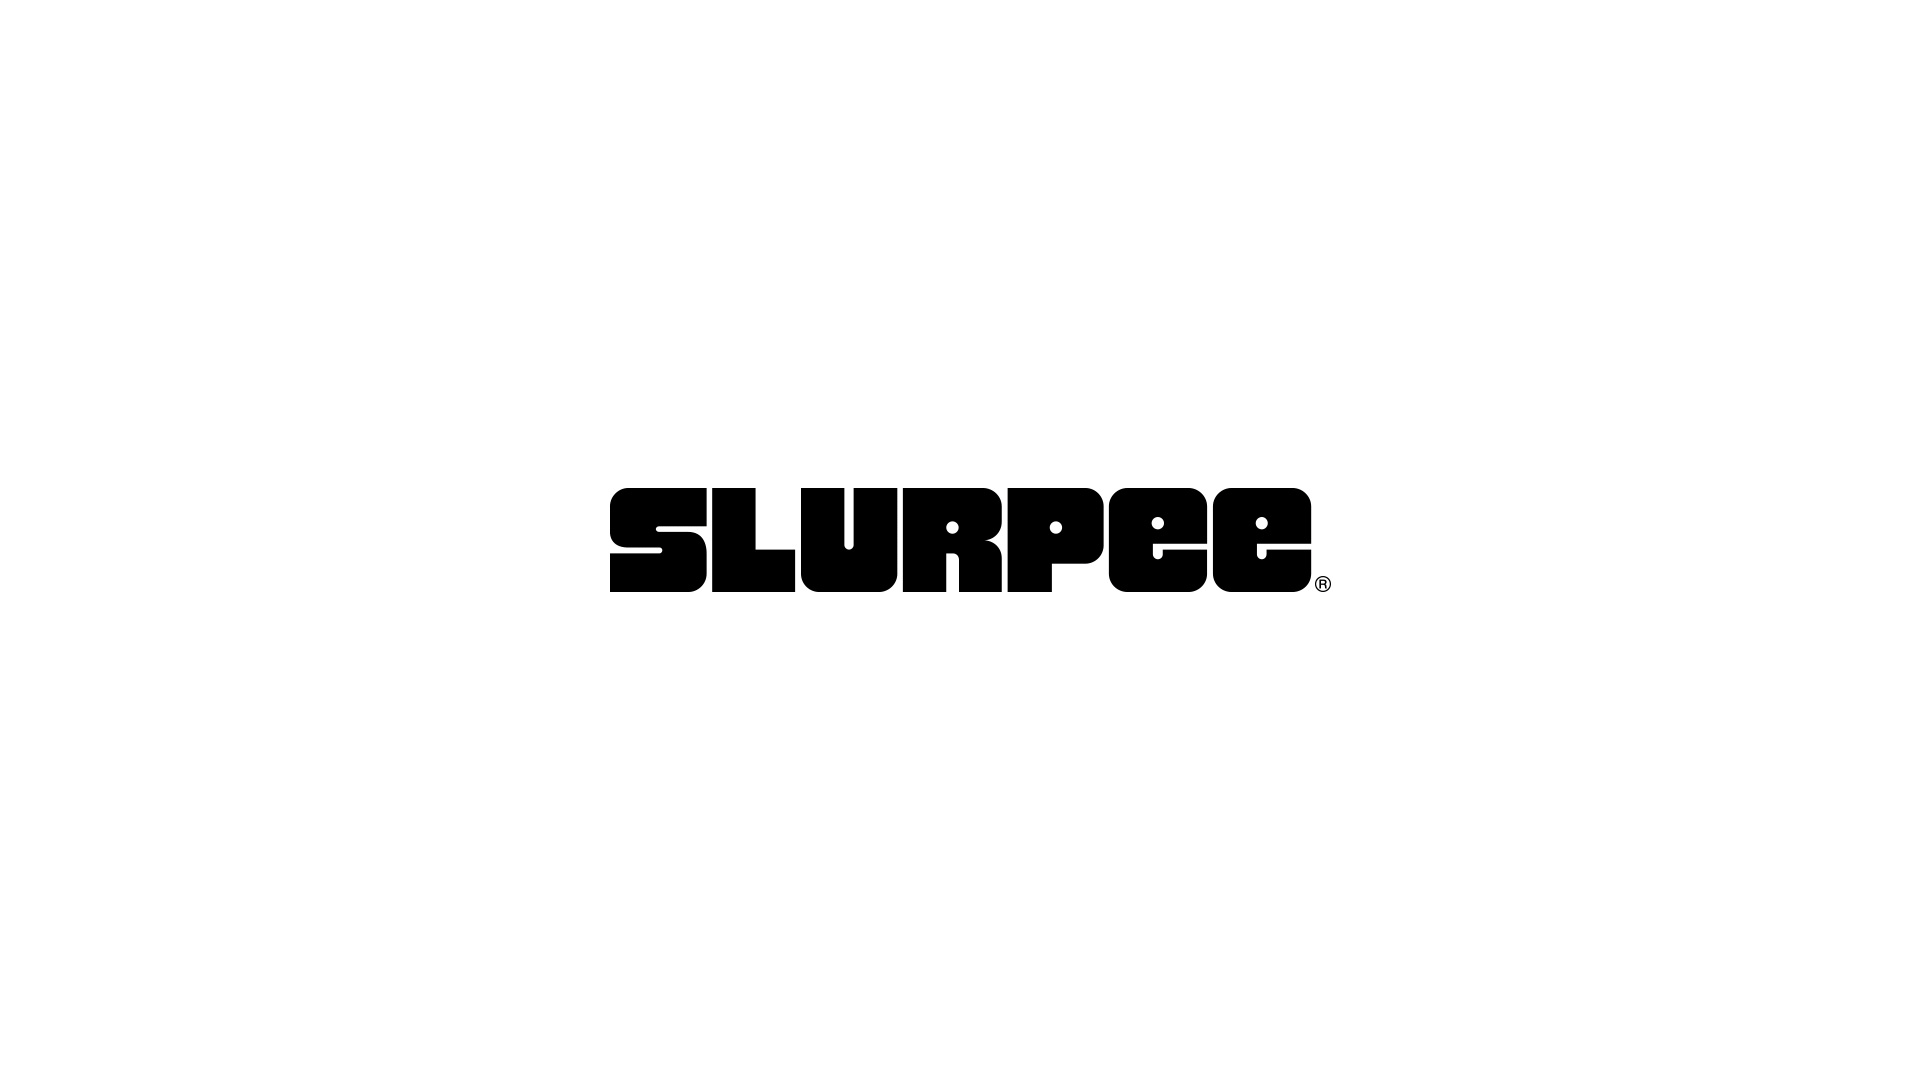 Slurpee—7 Eleven